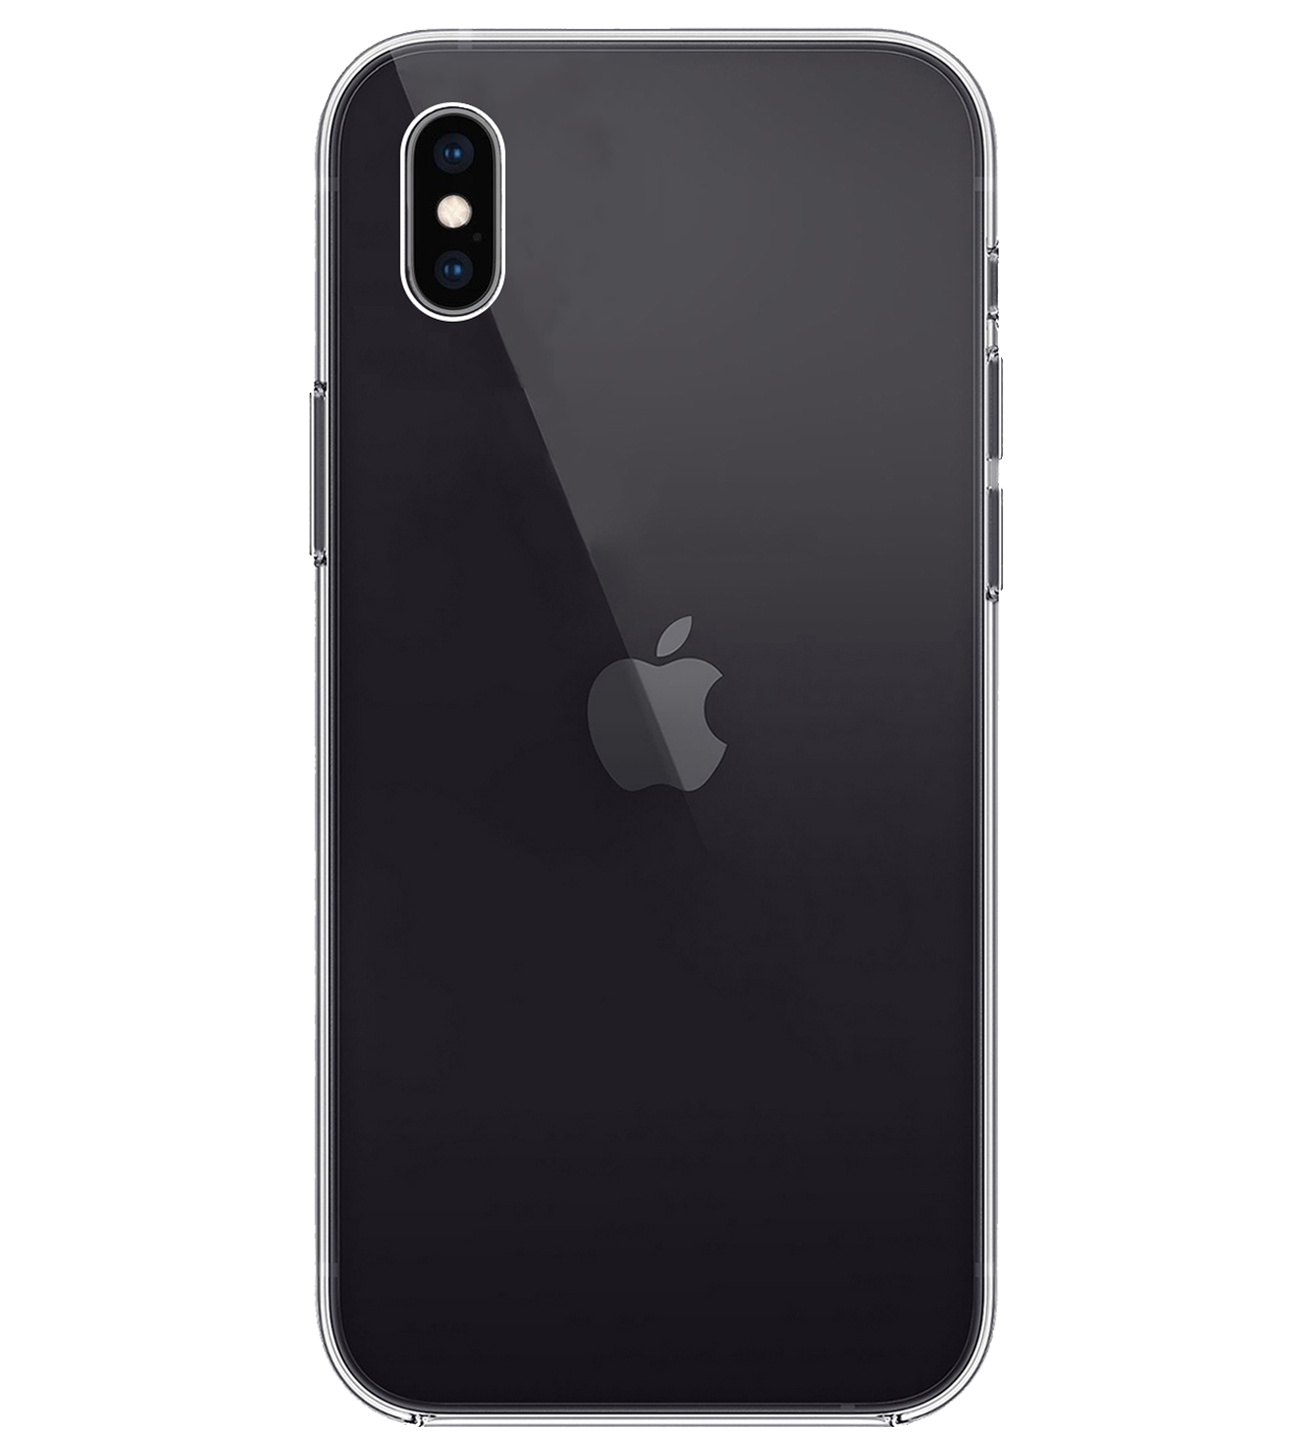 BASEY. Hoes voor iPhone Xs Max Hoesje Siliconen Back Cover Case - Hoes voor iPhone Xs Max Hoes Silicone Case Hoesje - Transparant - 2 Stuks